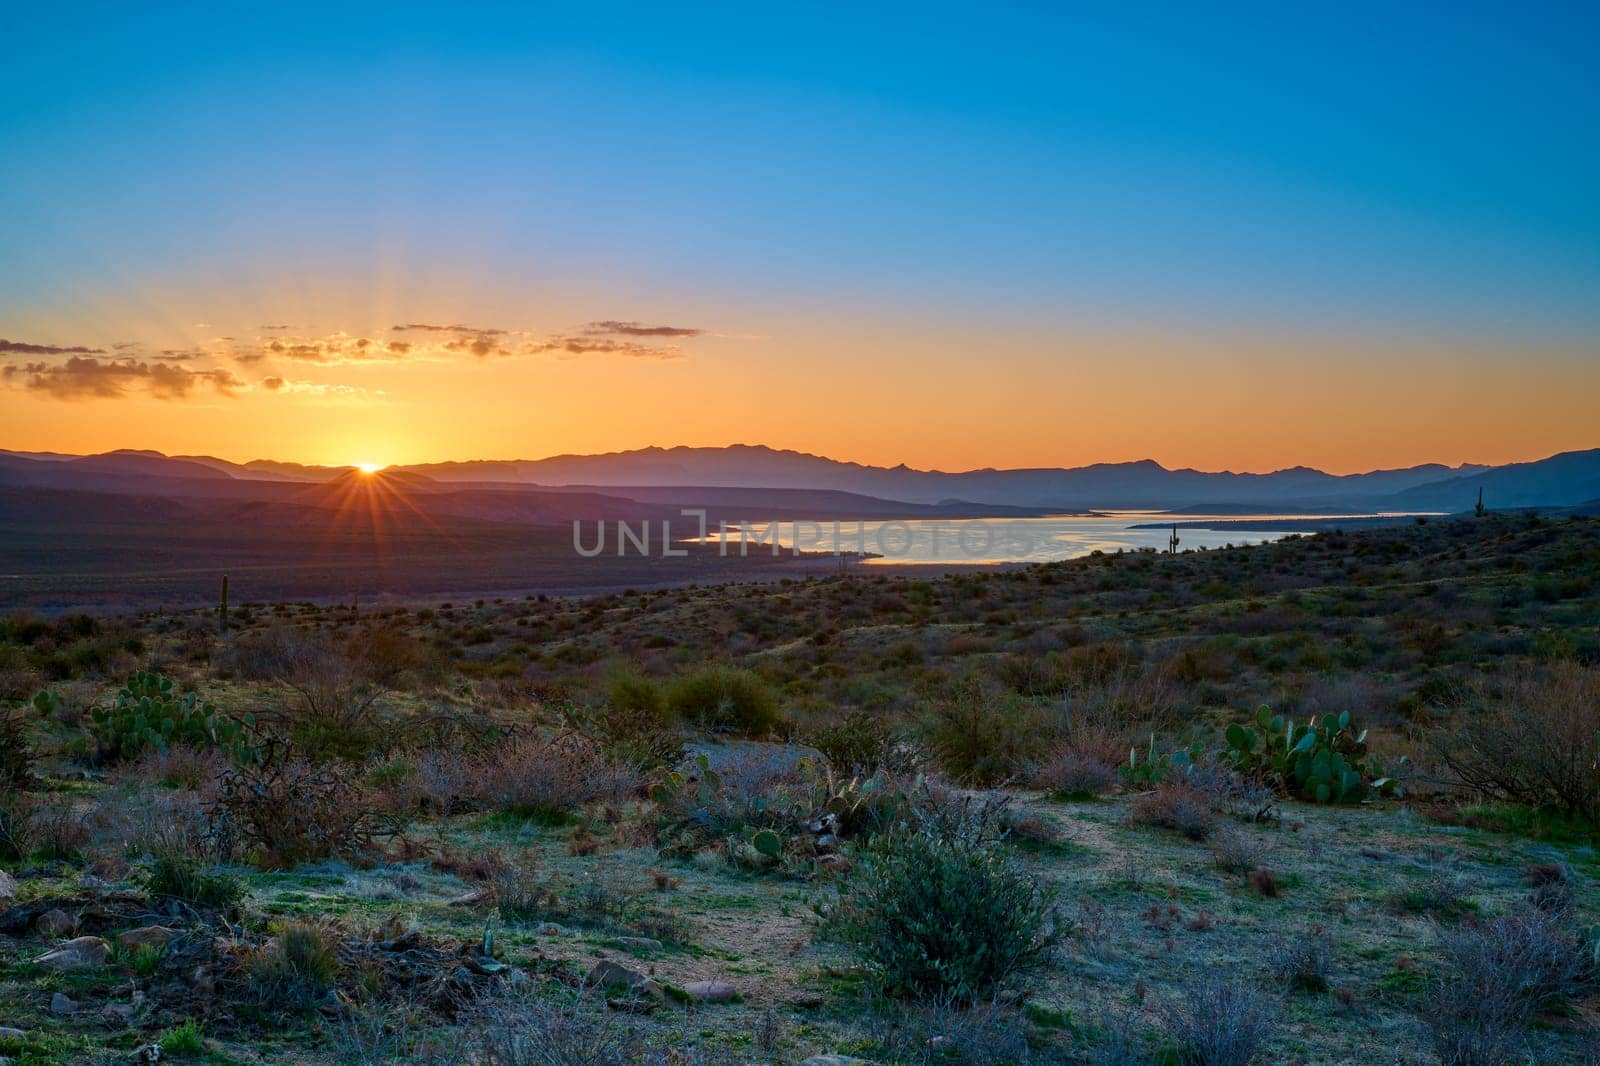 Sunrise at Roosevelt Lake in the Tonto National Forest, AZ.